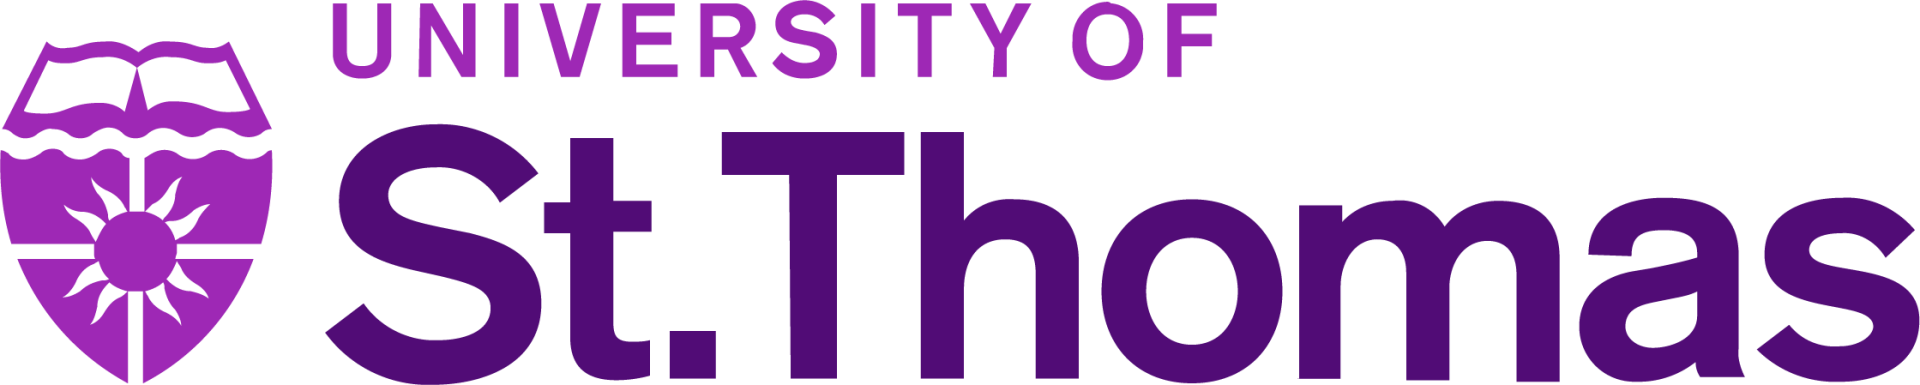 Premier Club Members | Worldwide College Tours | University of St. Thomas Minnesota